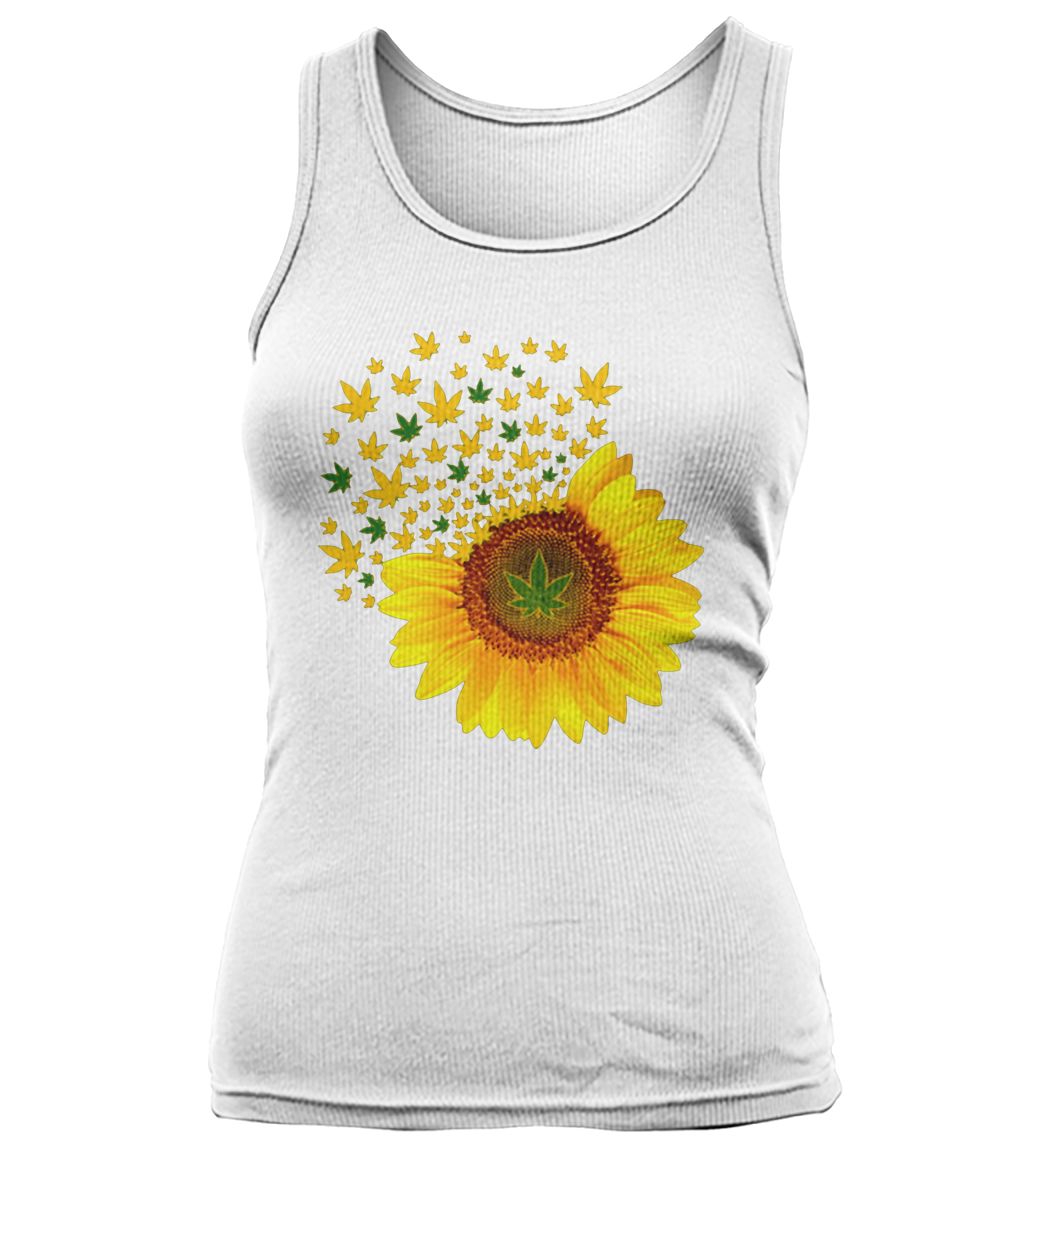 Weed sunflower women's tank top